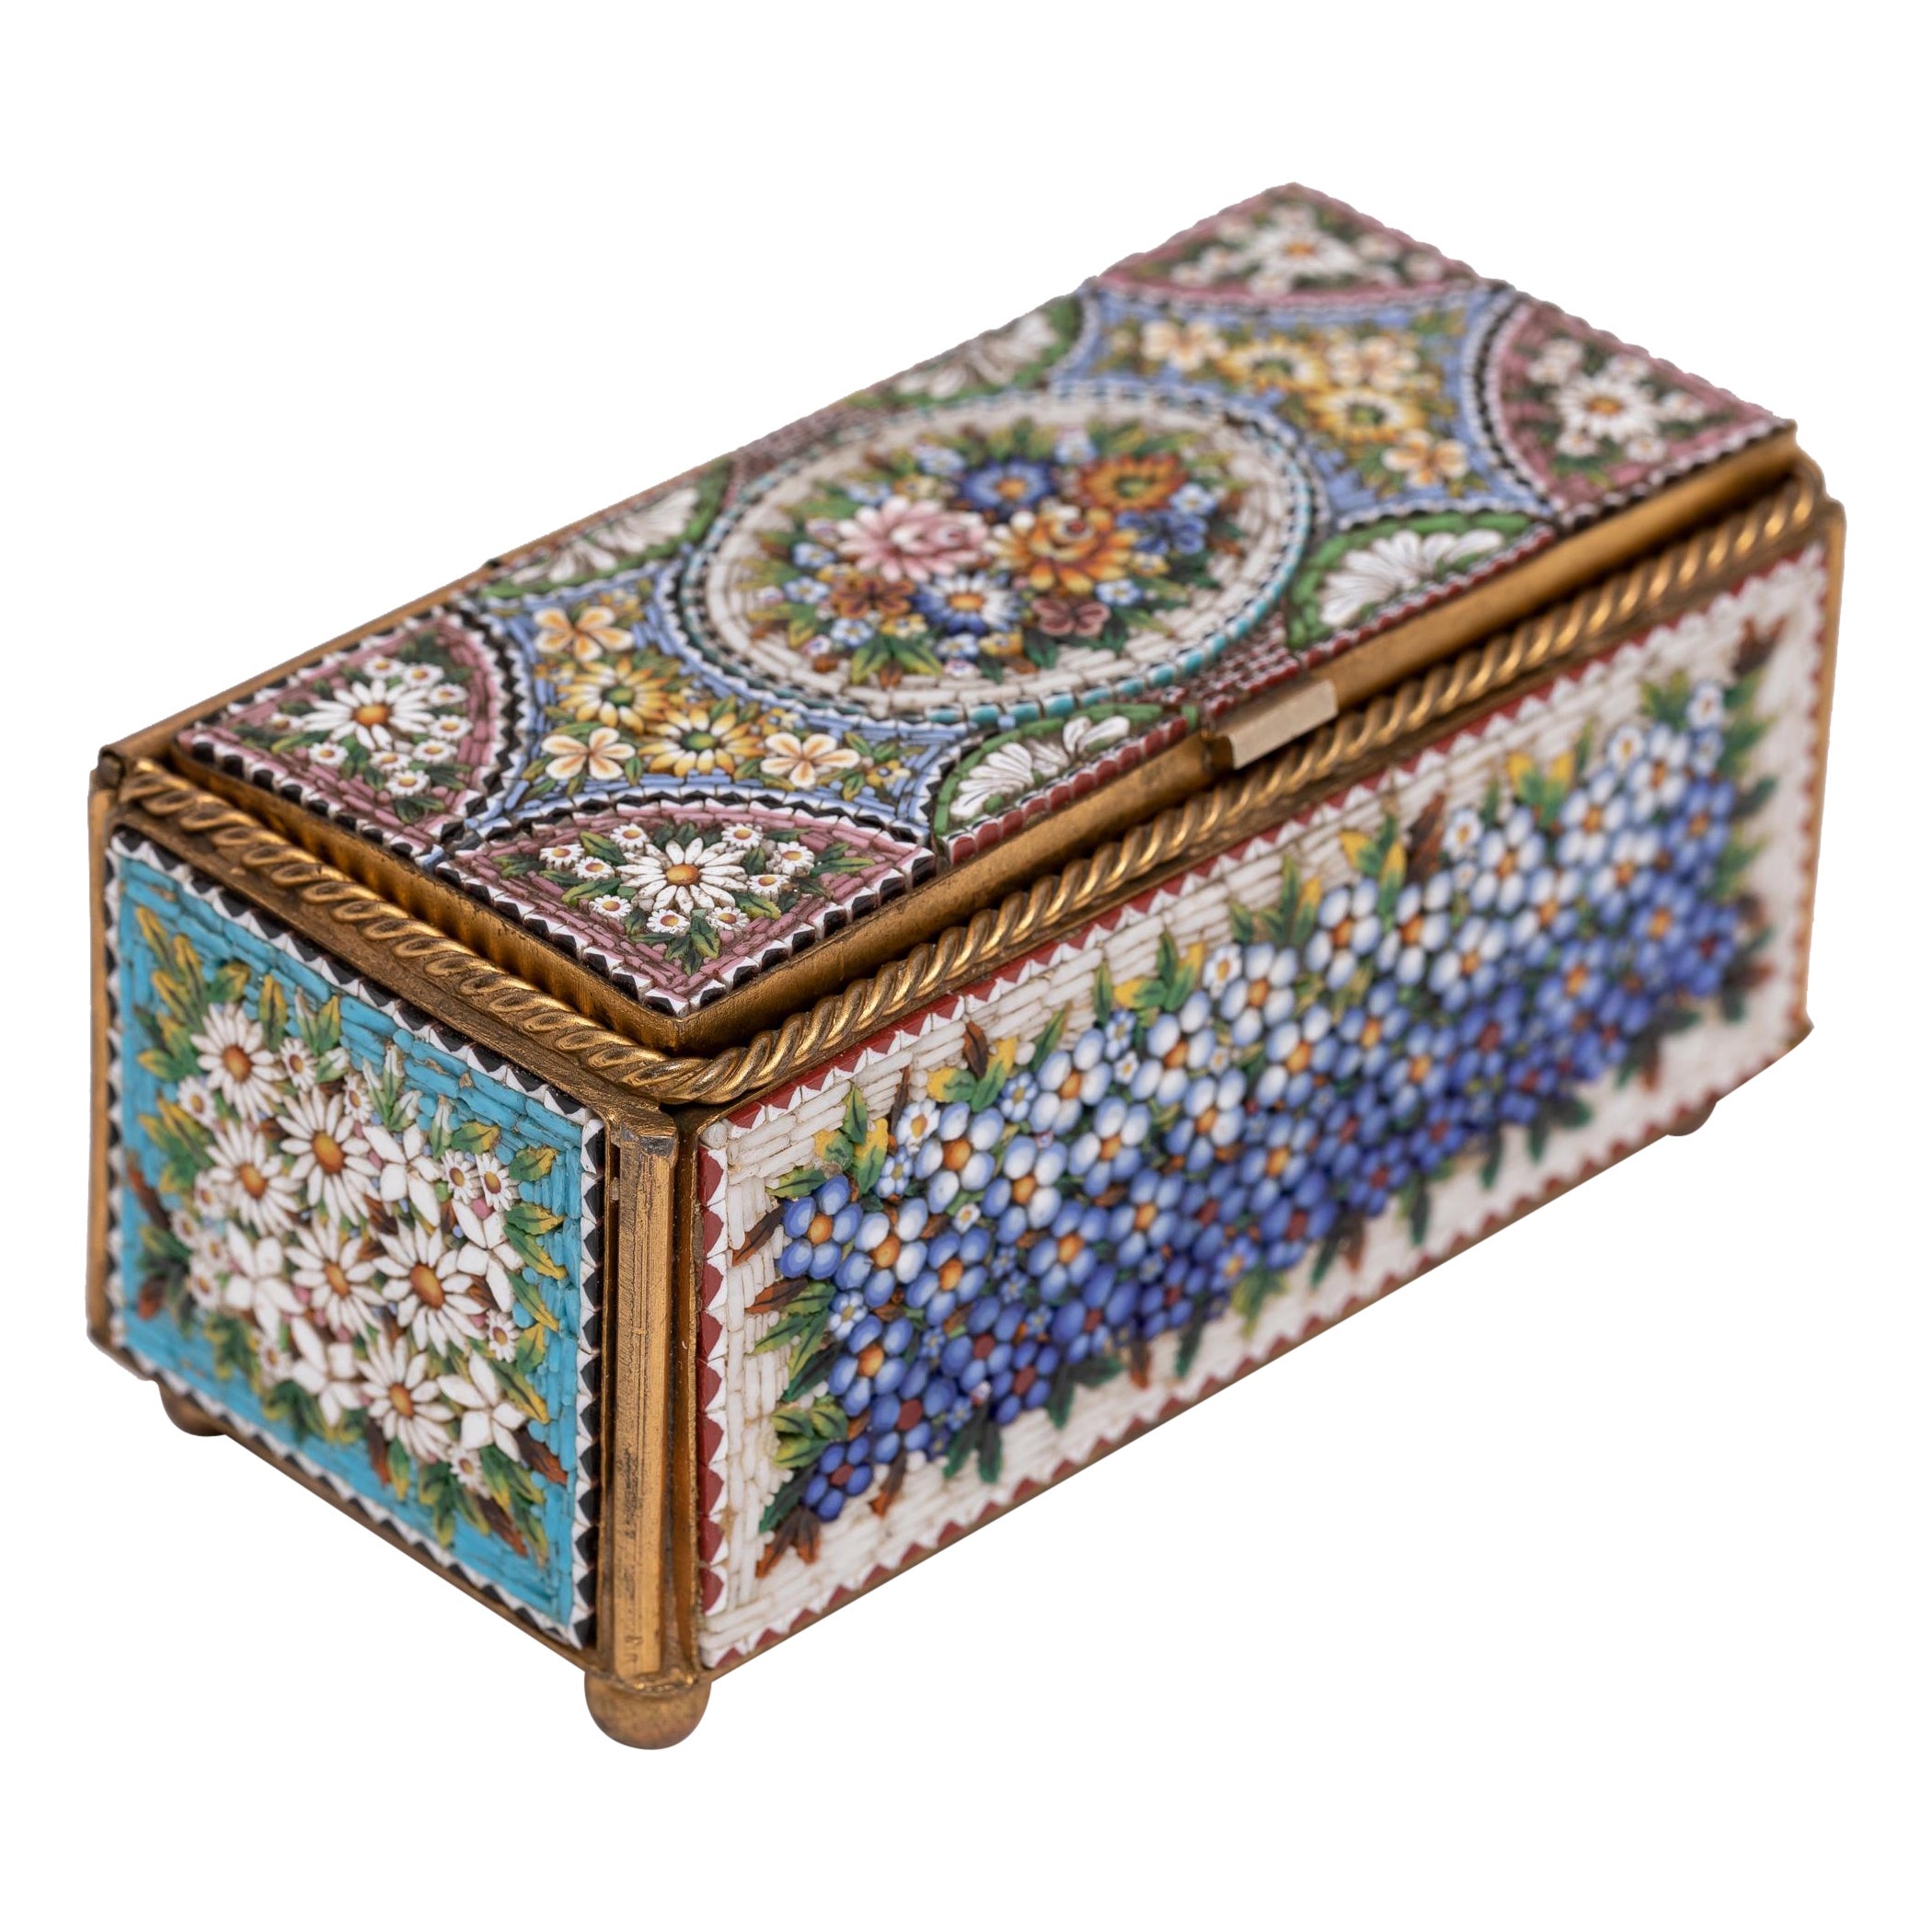 An Antique 19th C. Italian Micro Mosaic Floral Motif Jewelry Box